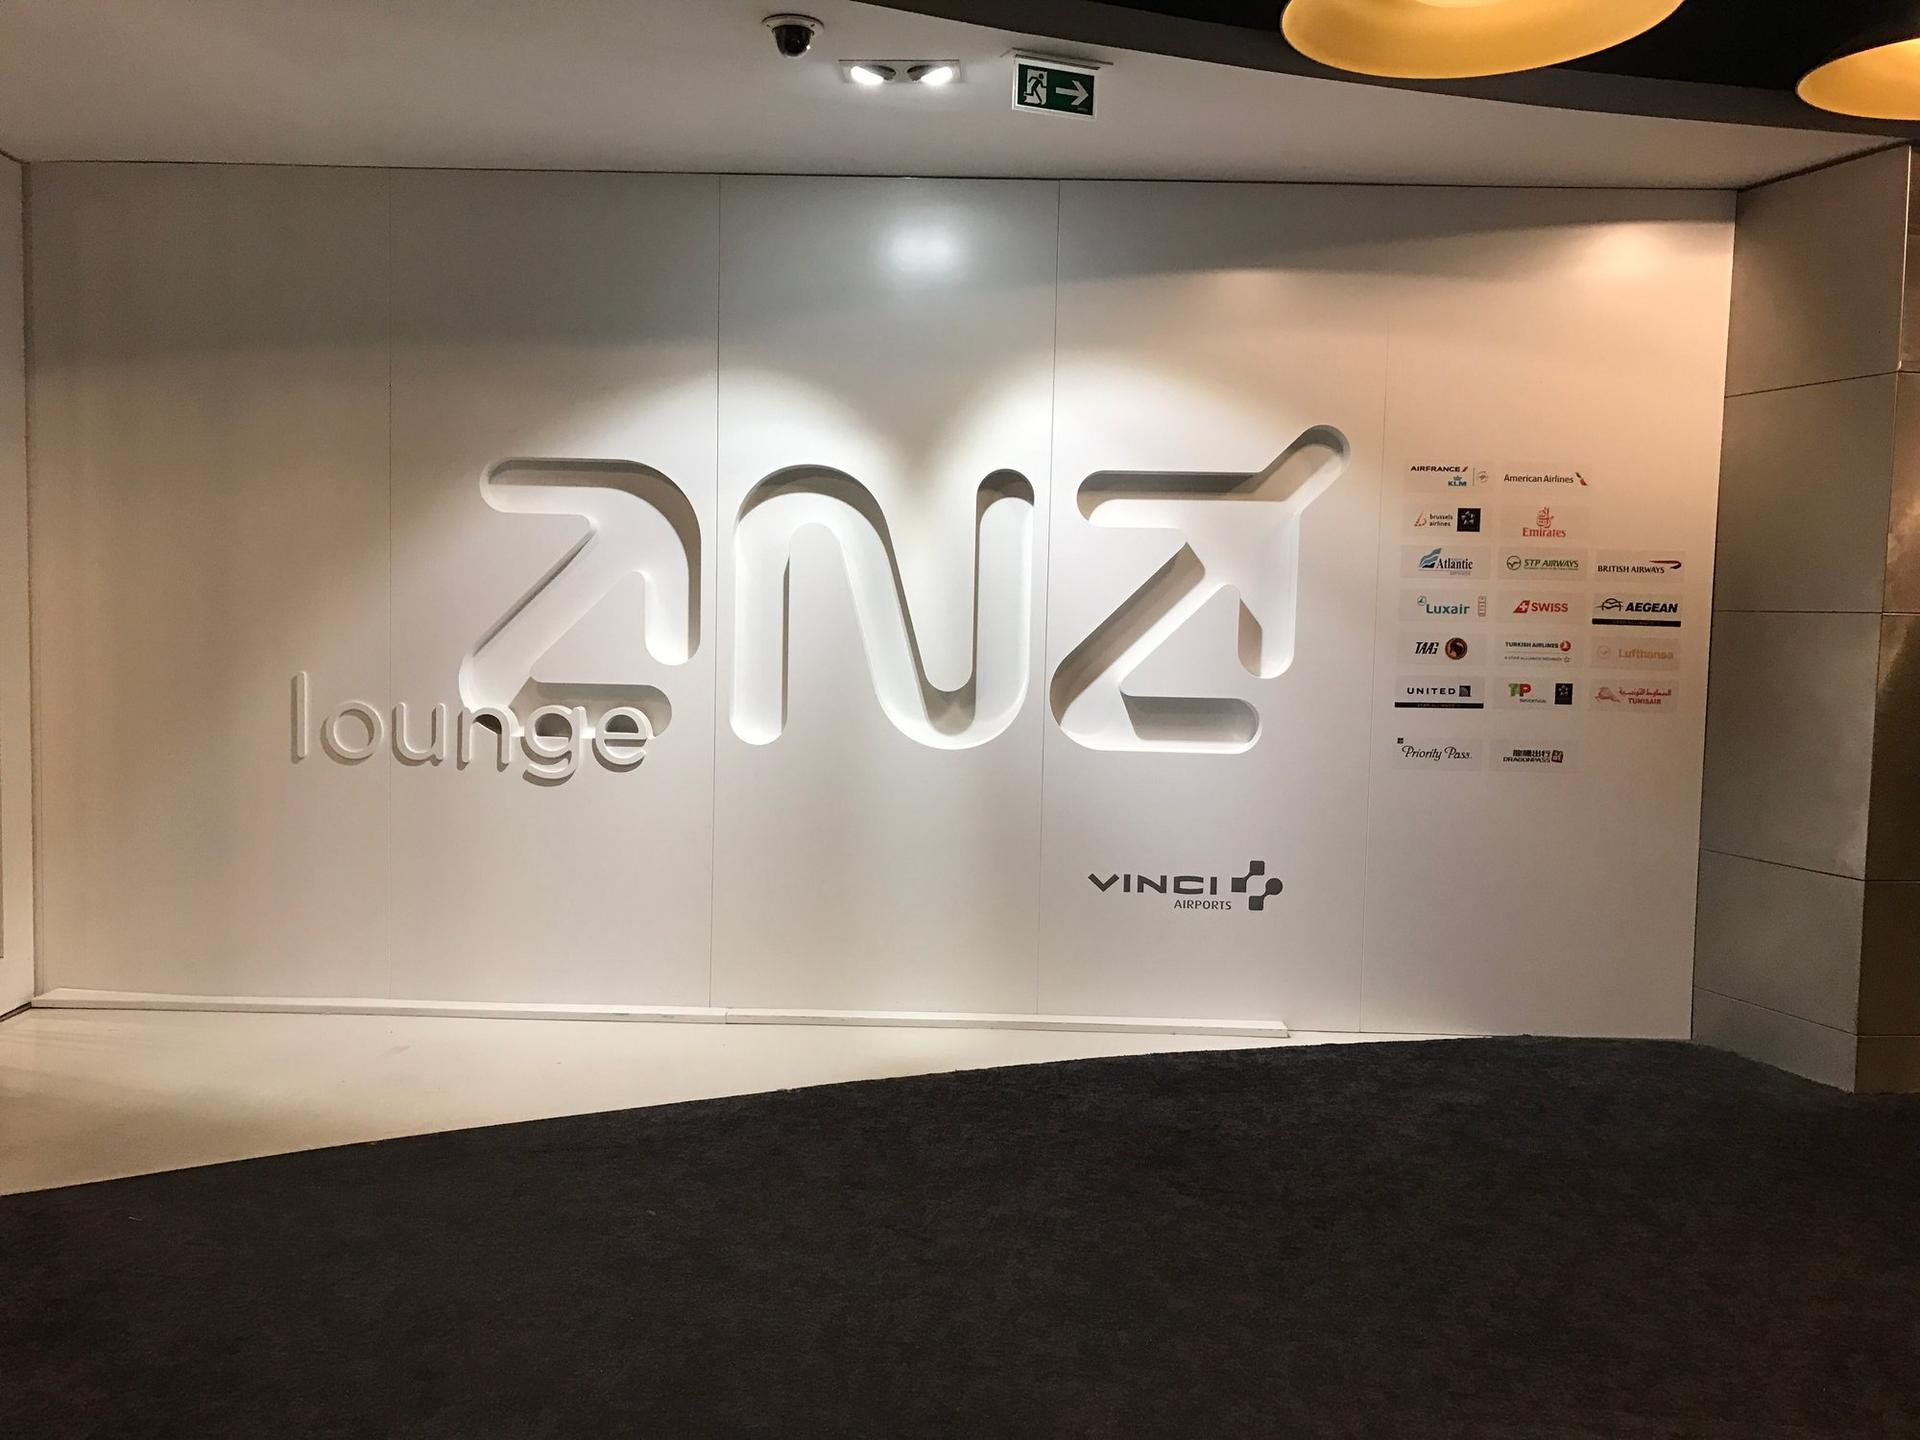 ANA Airport Lounge image 29 of 49